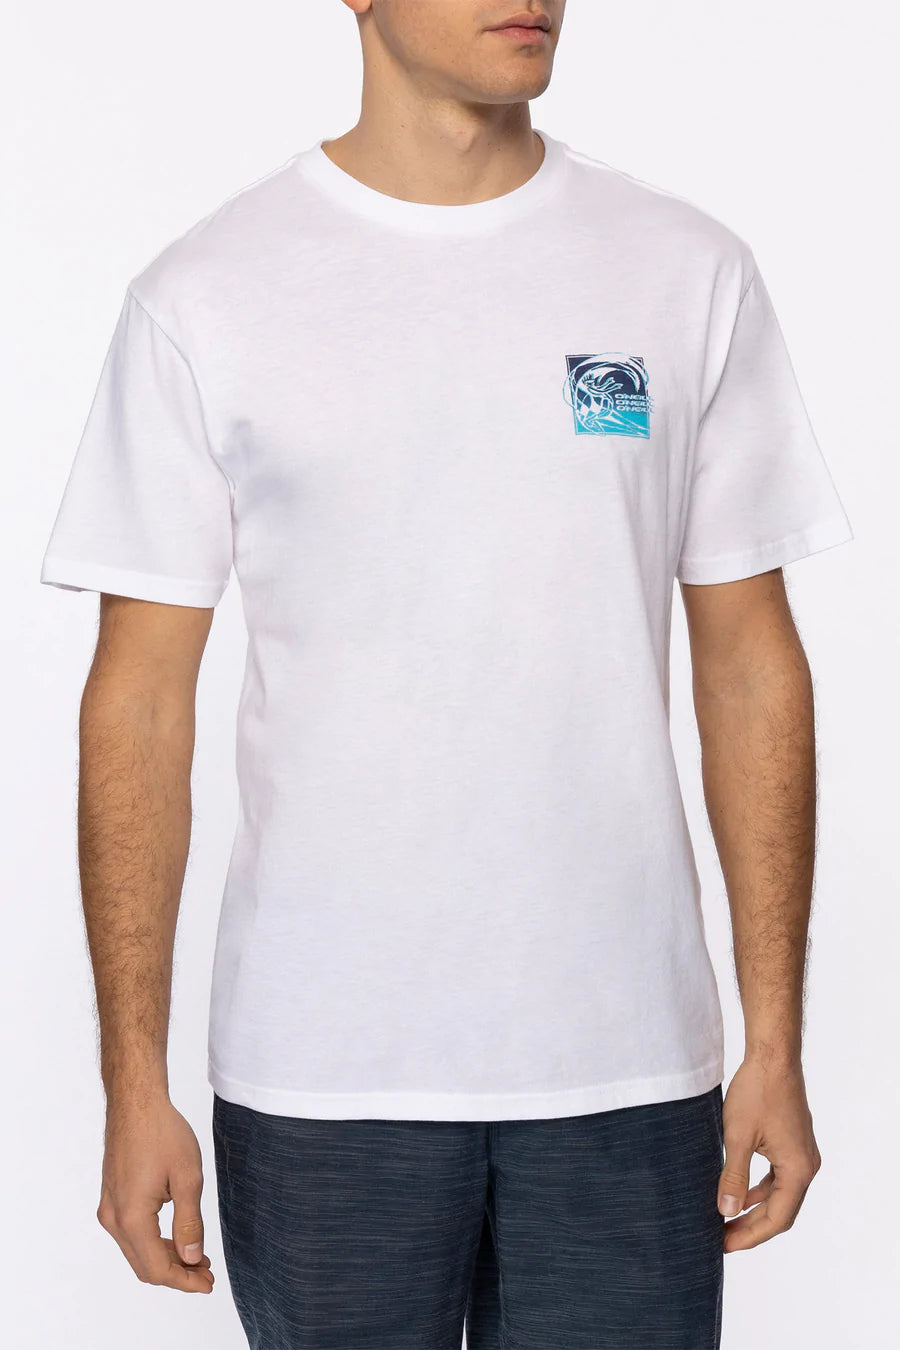 Oneill Stenciled Tee - White Mens T Shirt